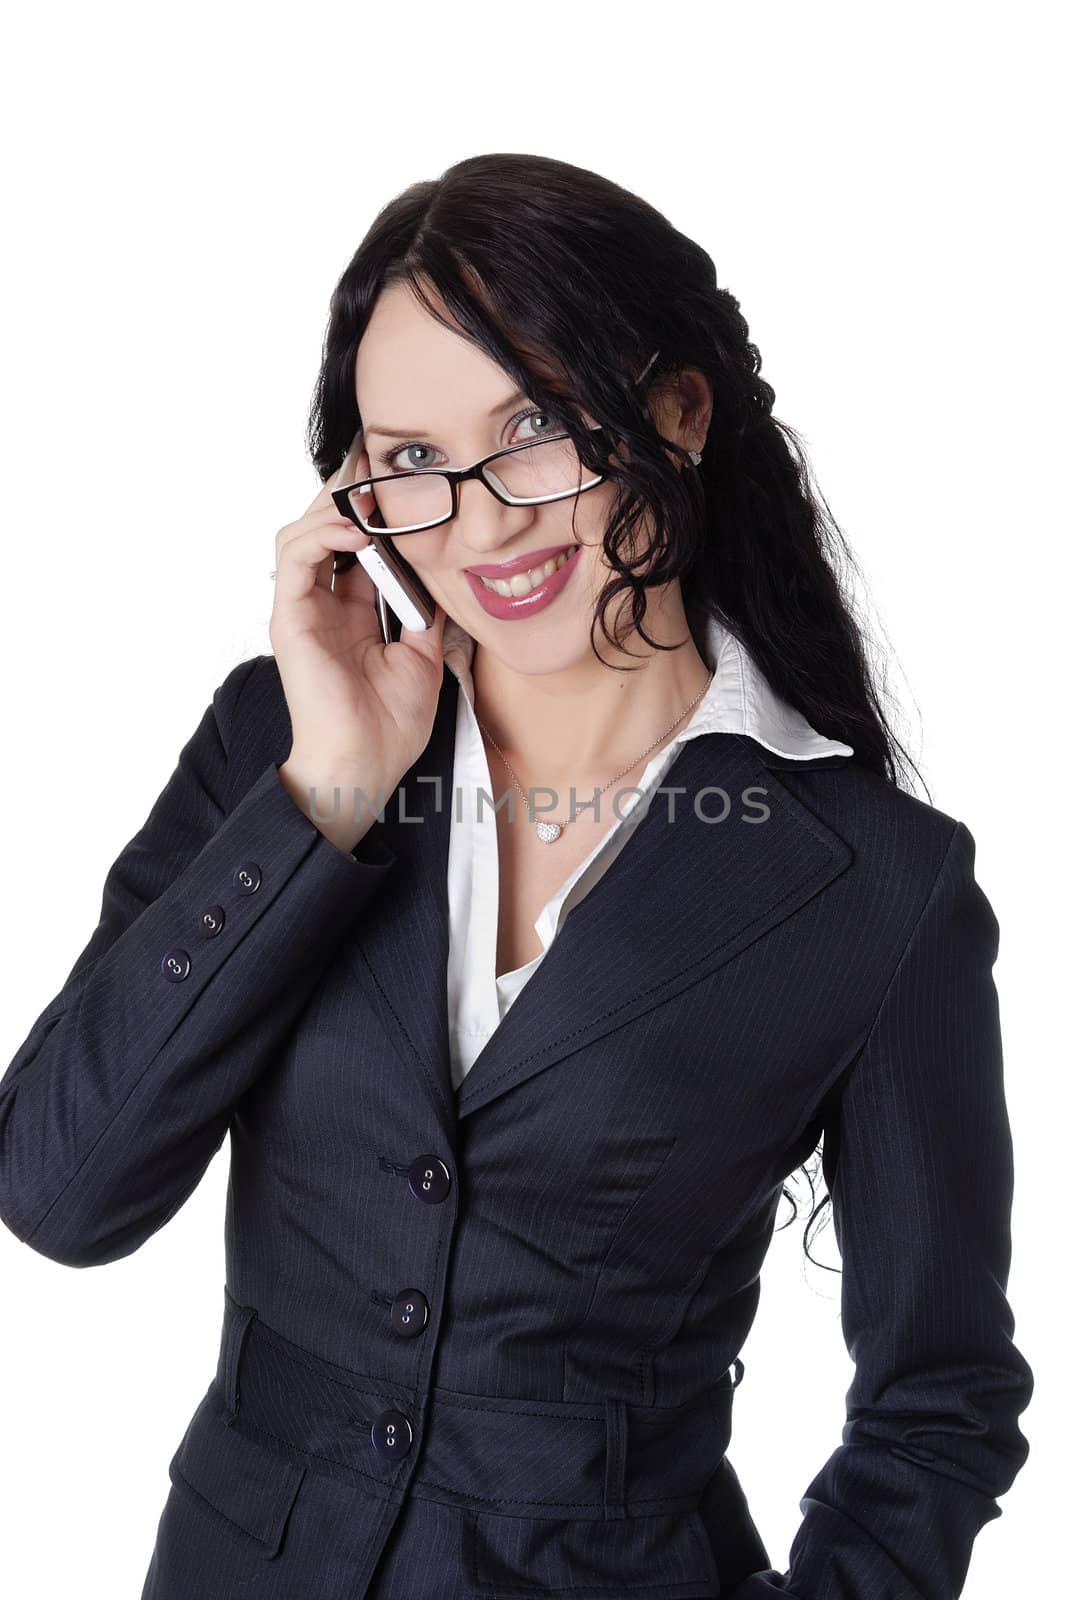 charming businesswoman by Baronerosso